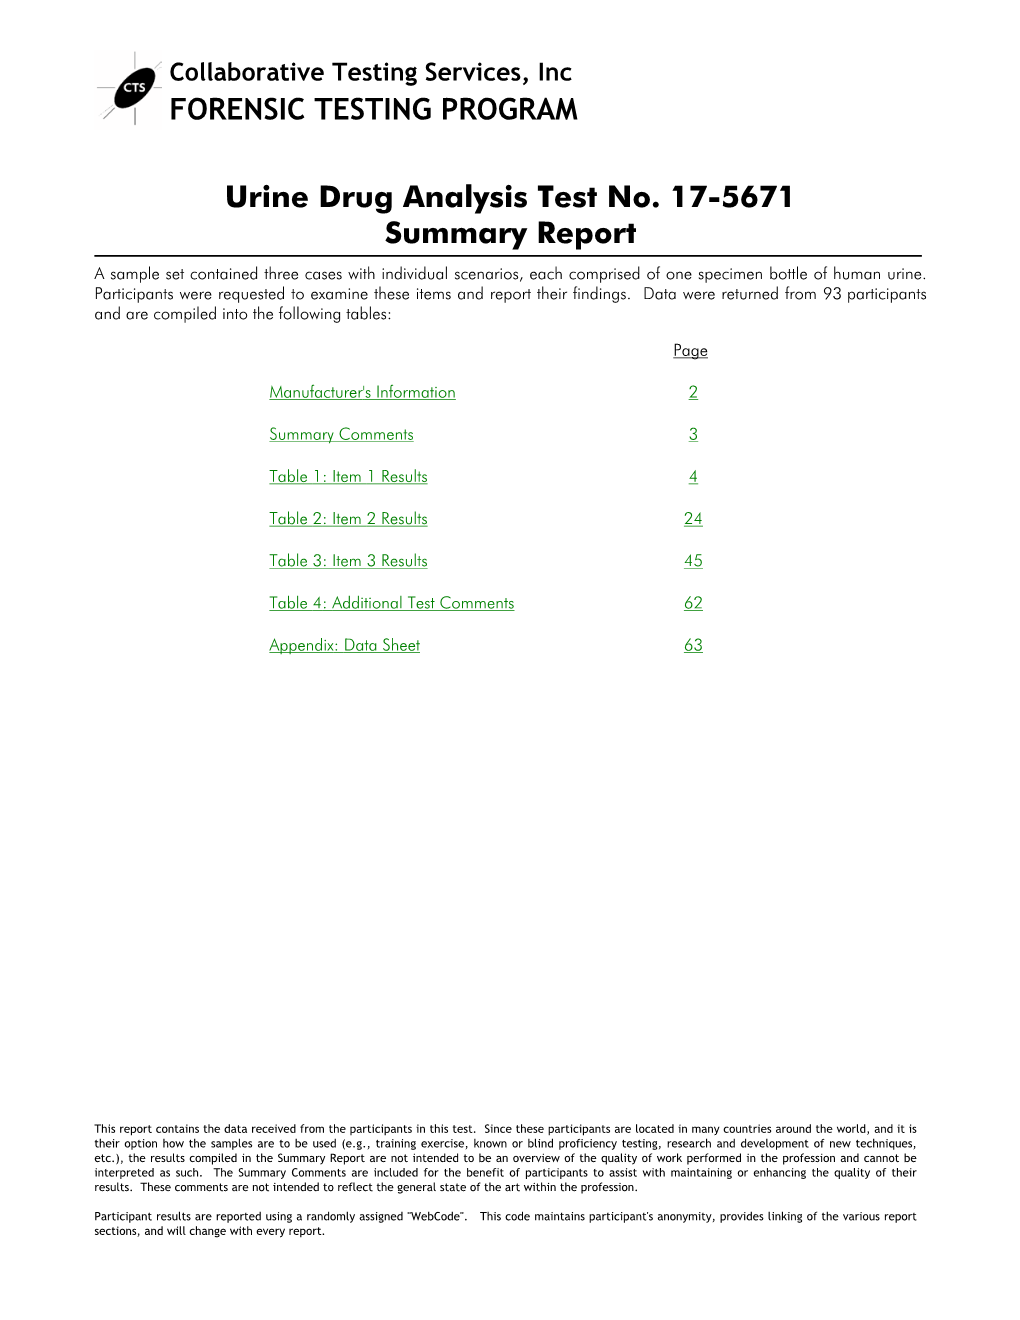 17-5671 Urine Drug Analysis